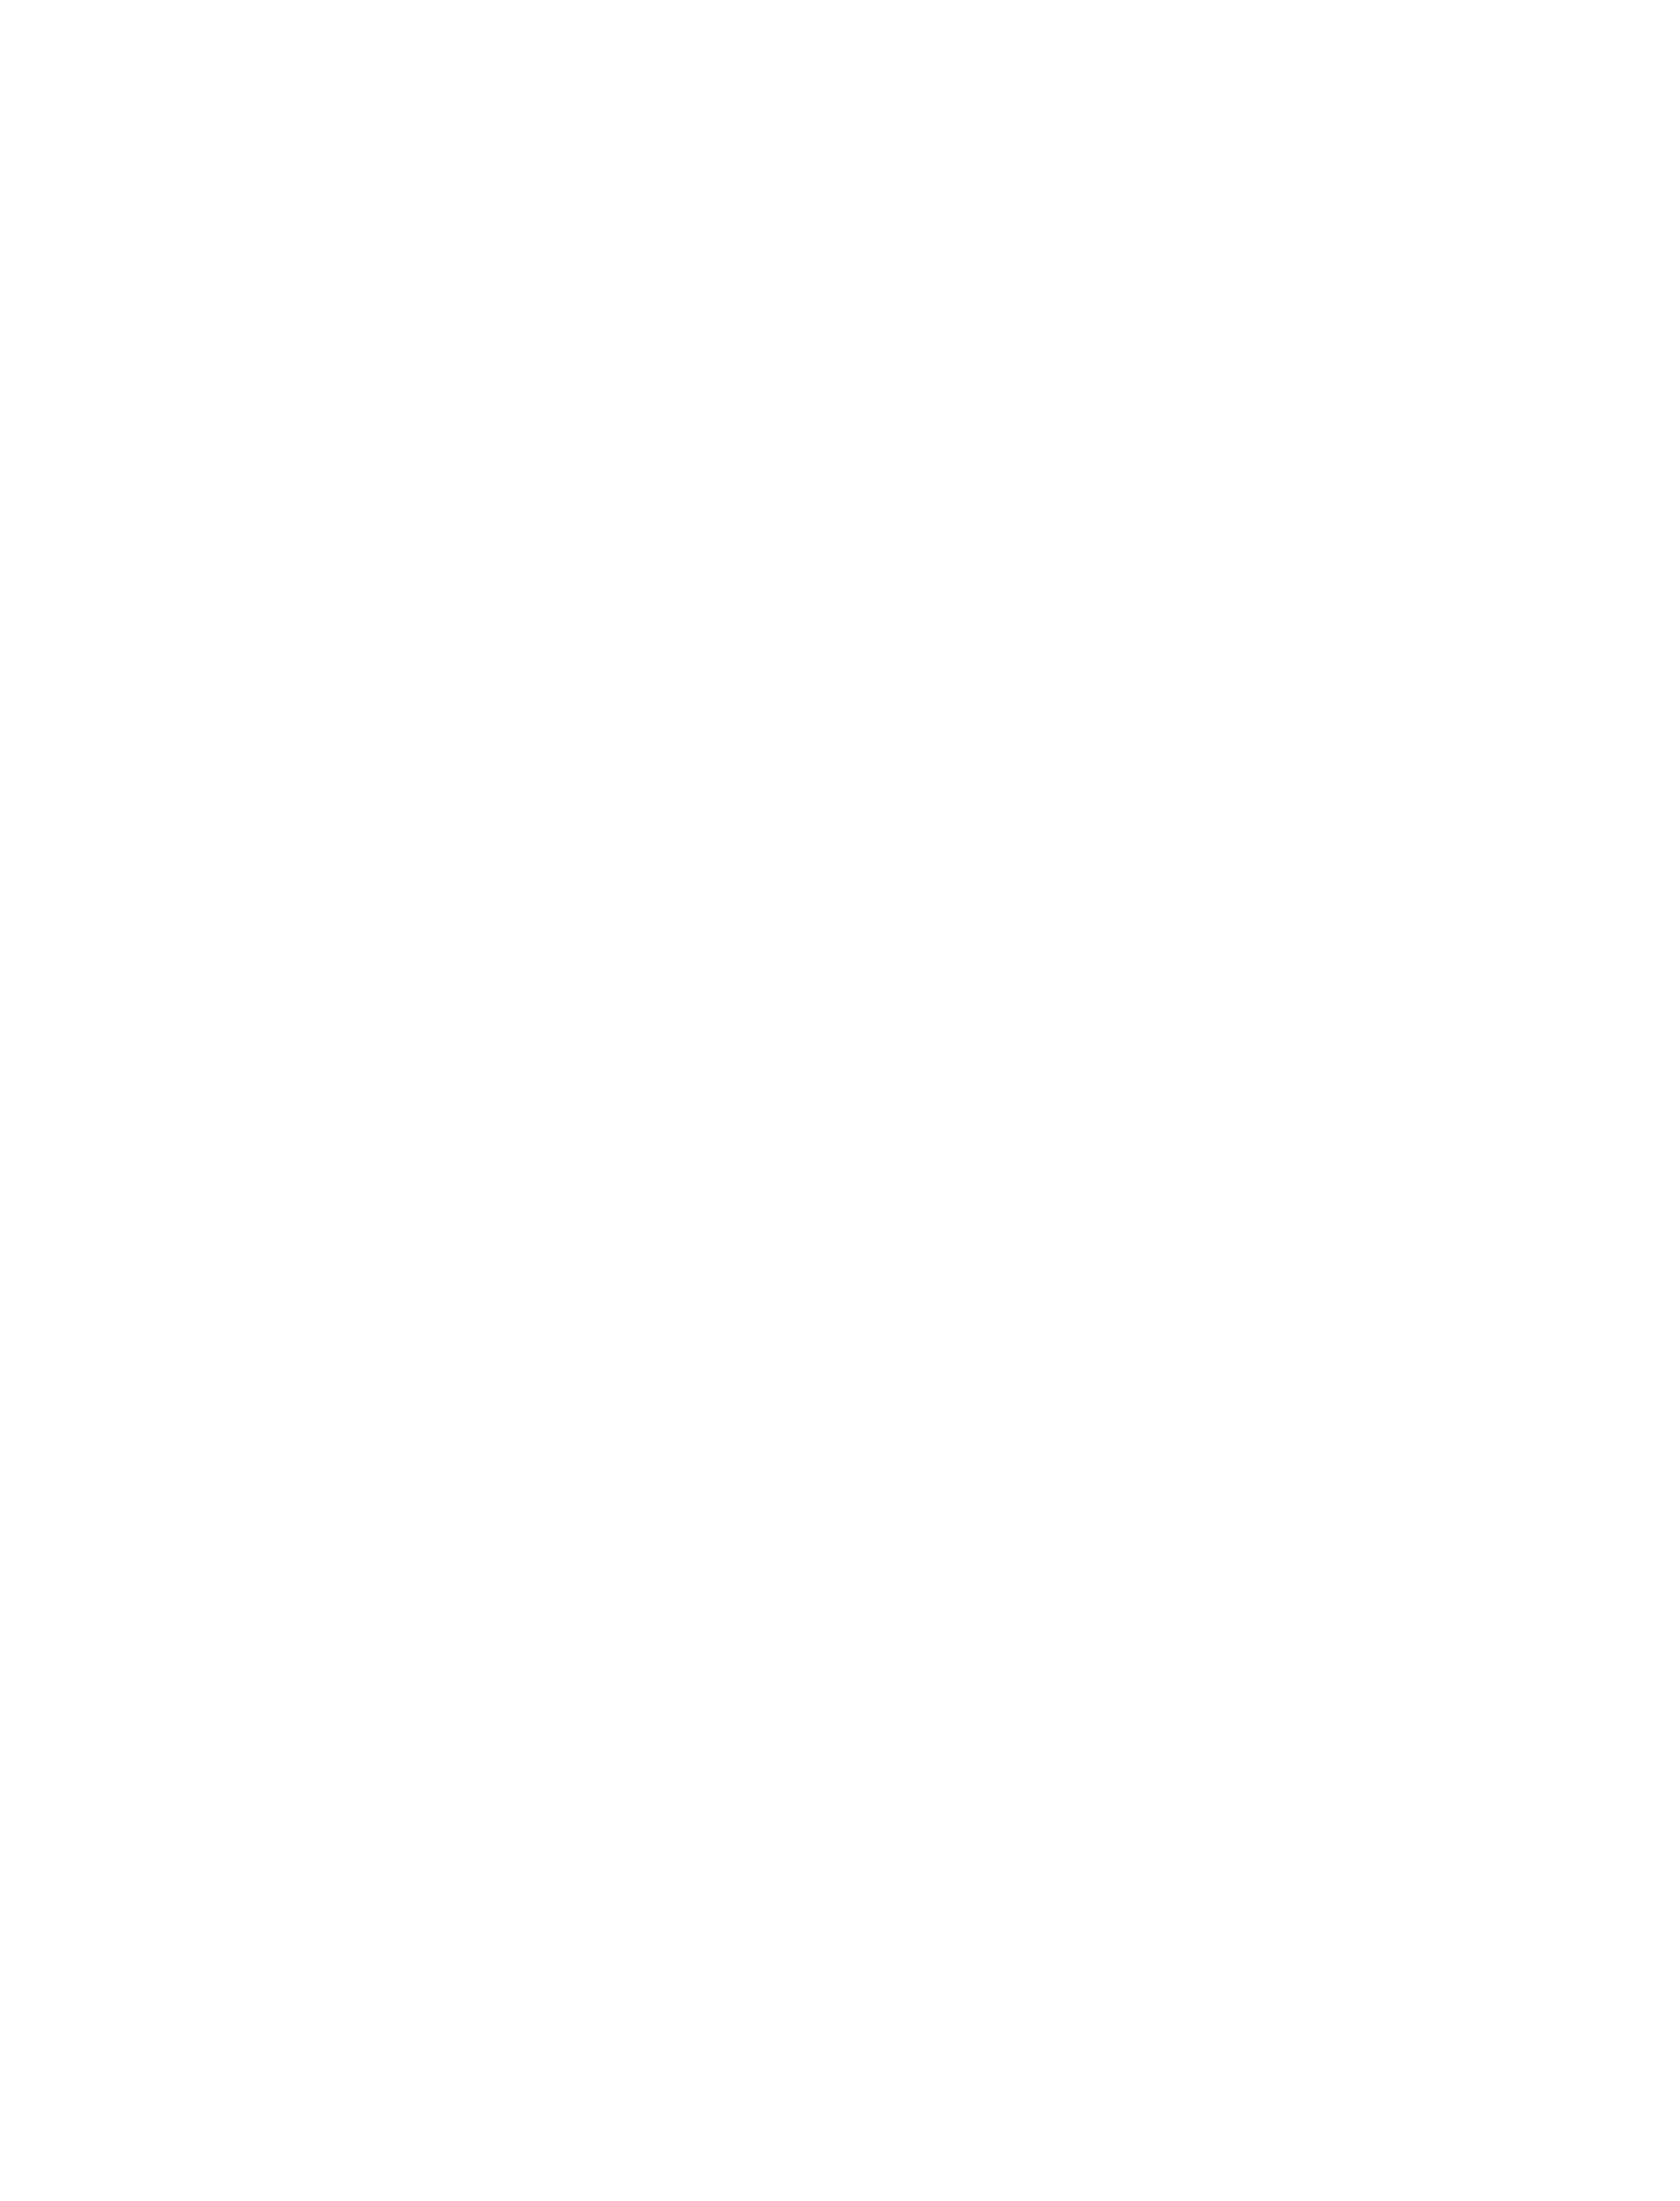 Instituto de la Sordera